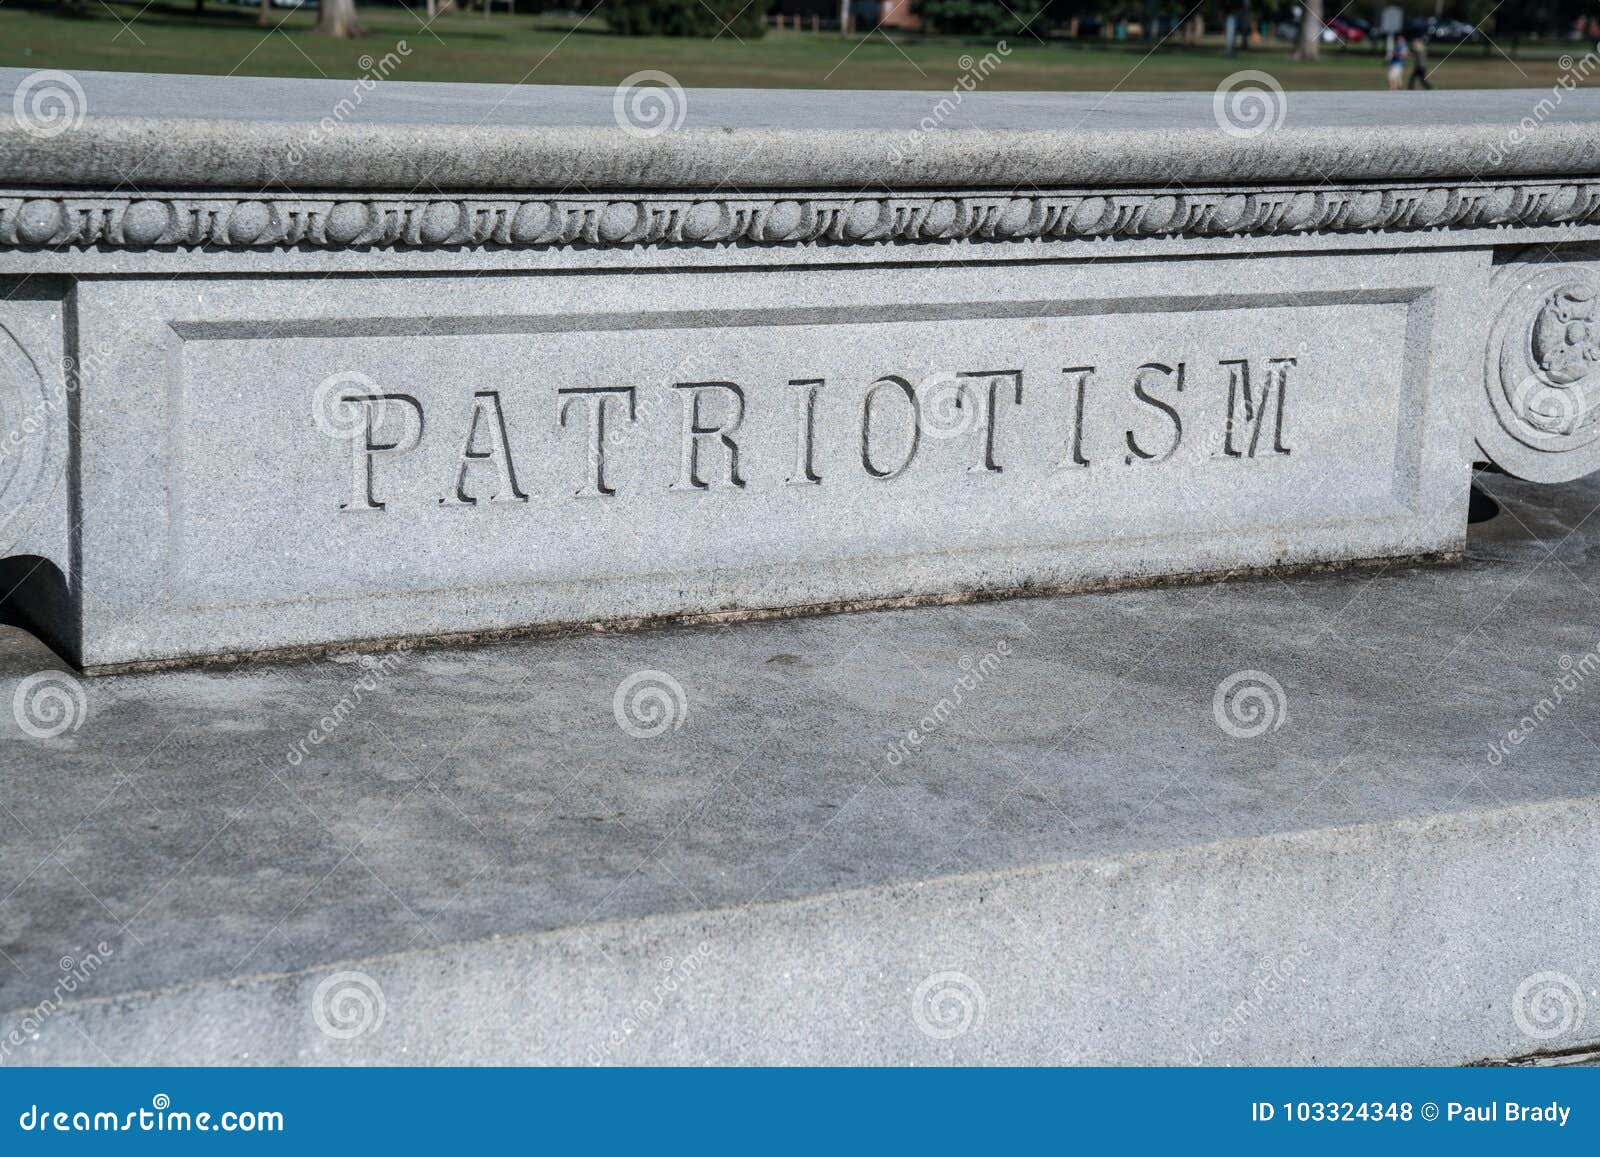 patriotism sign carved in stone